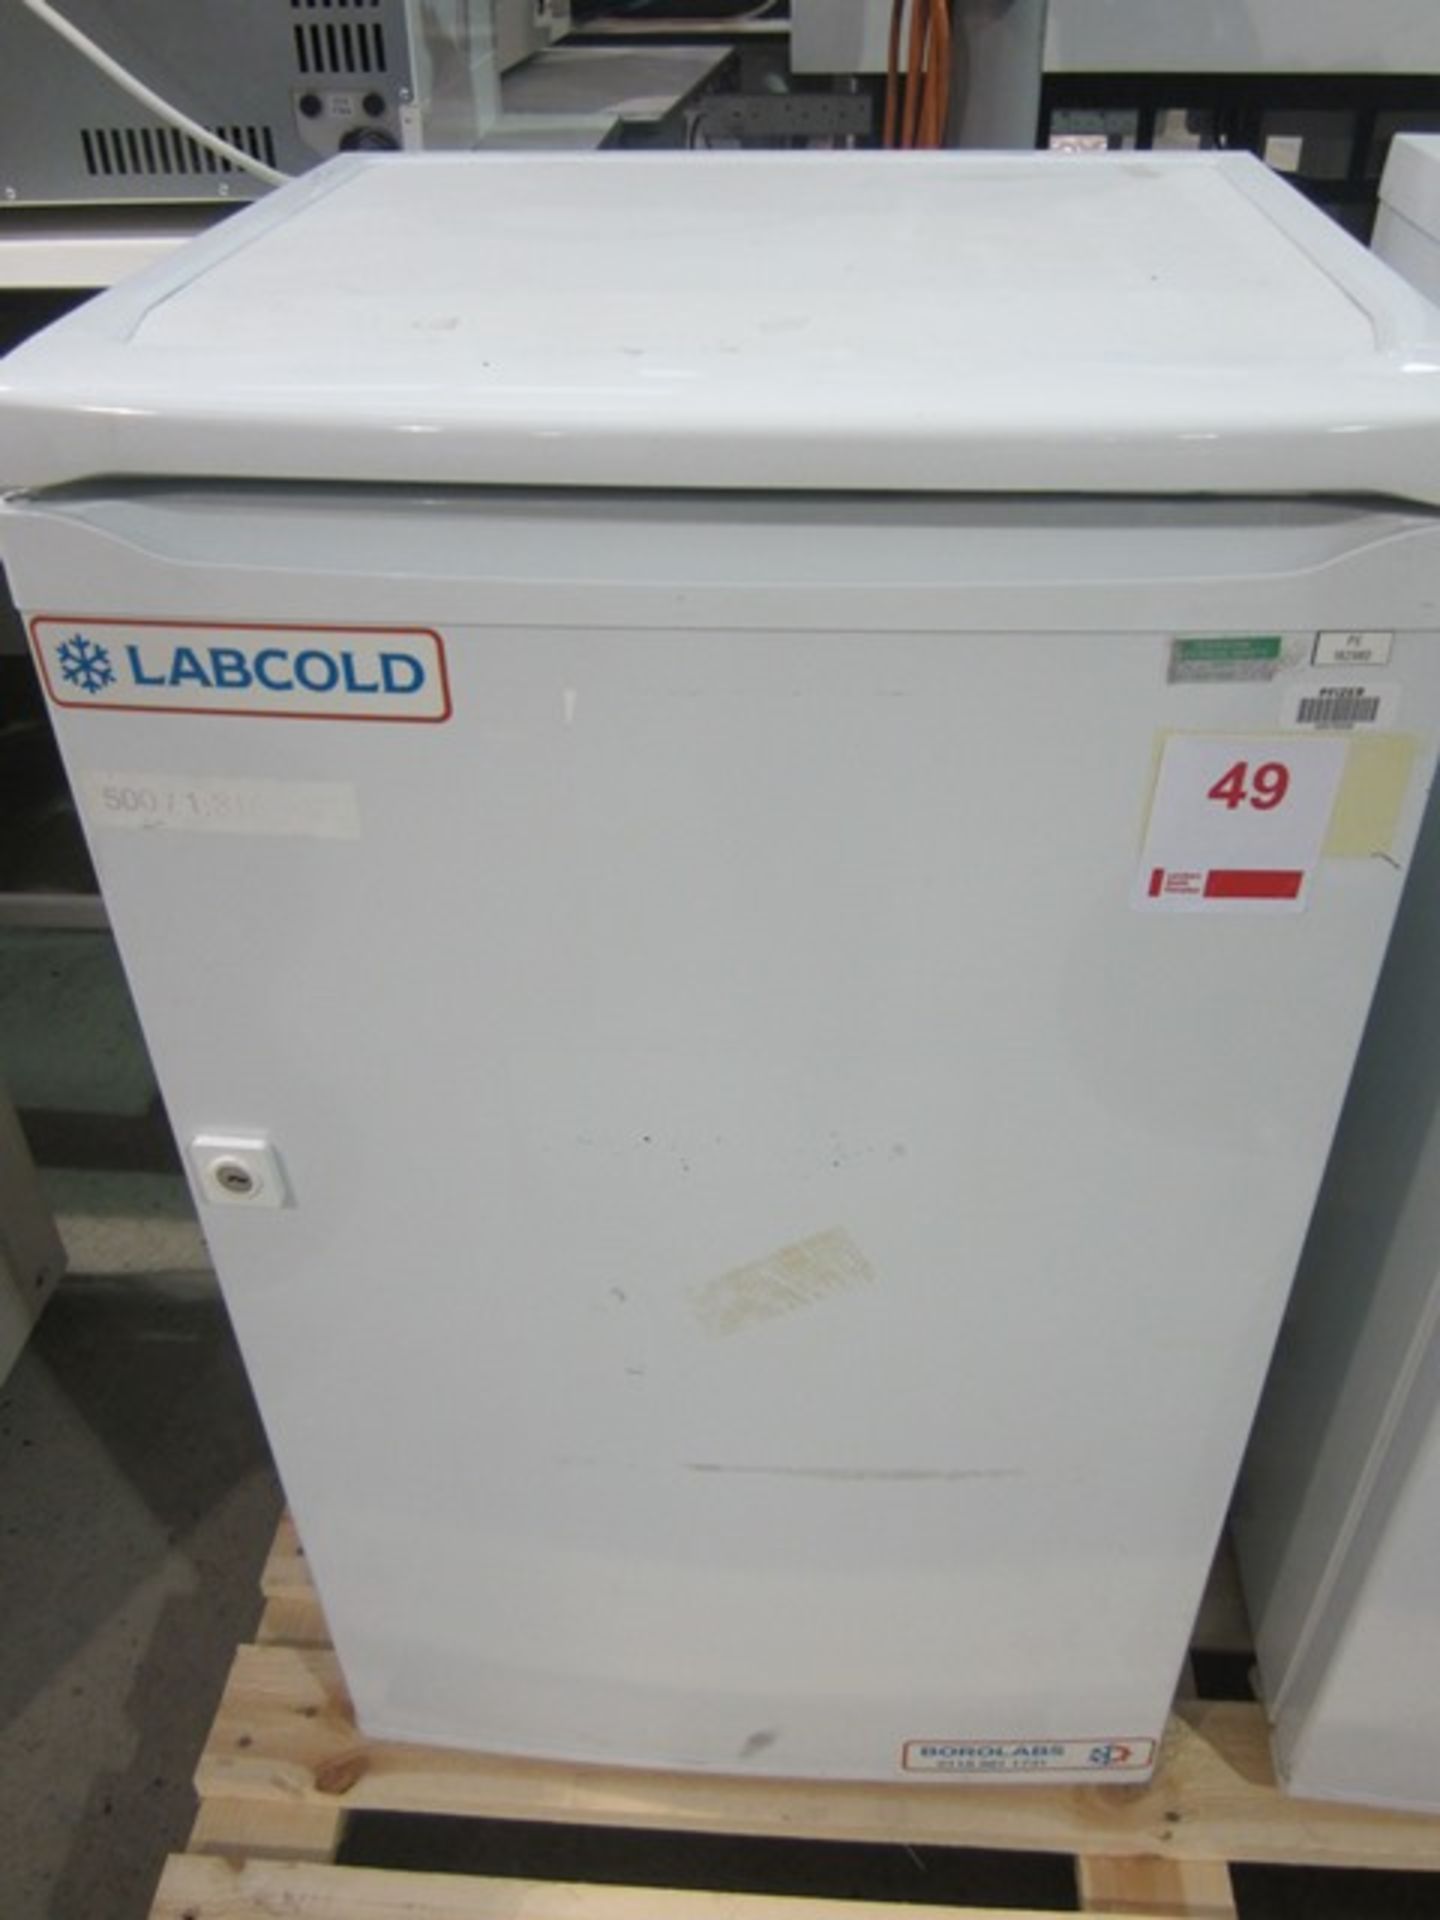 Labcold multishelf refrigerator